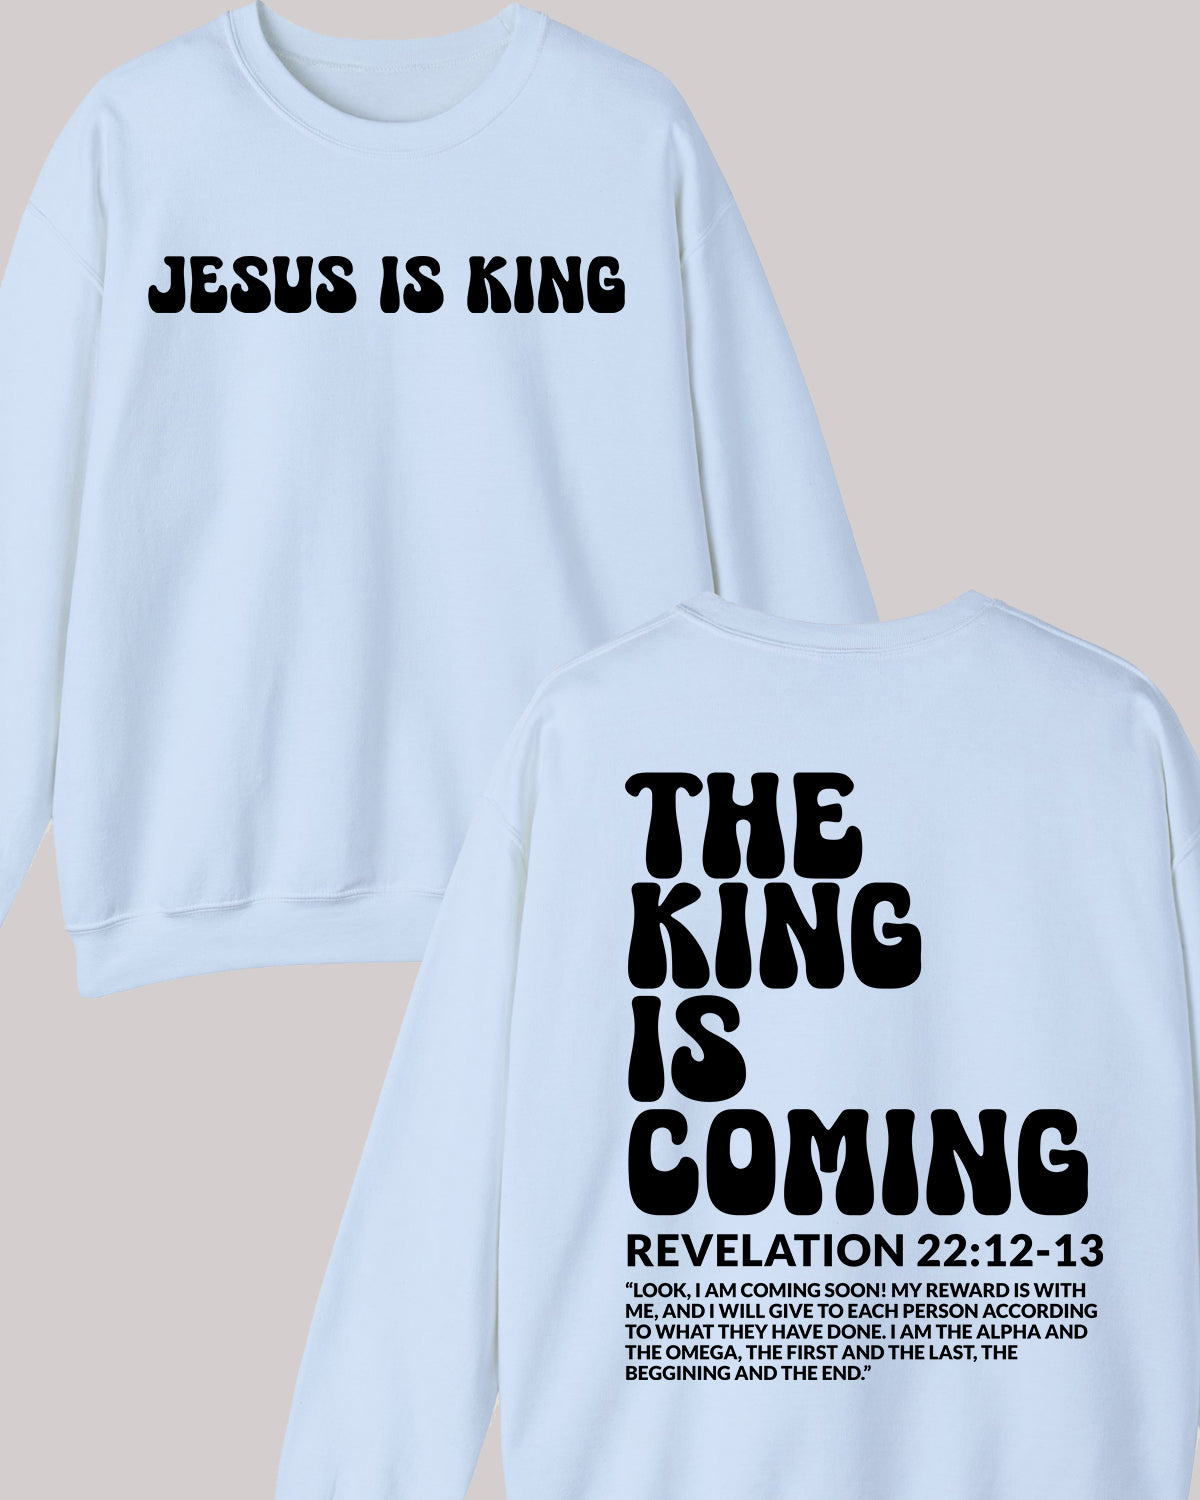 The King is Coming Revelation Jesus Bible Verse Front back Sweatshirt